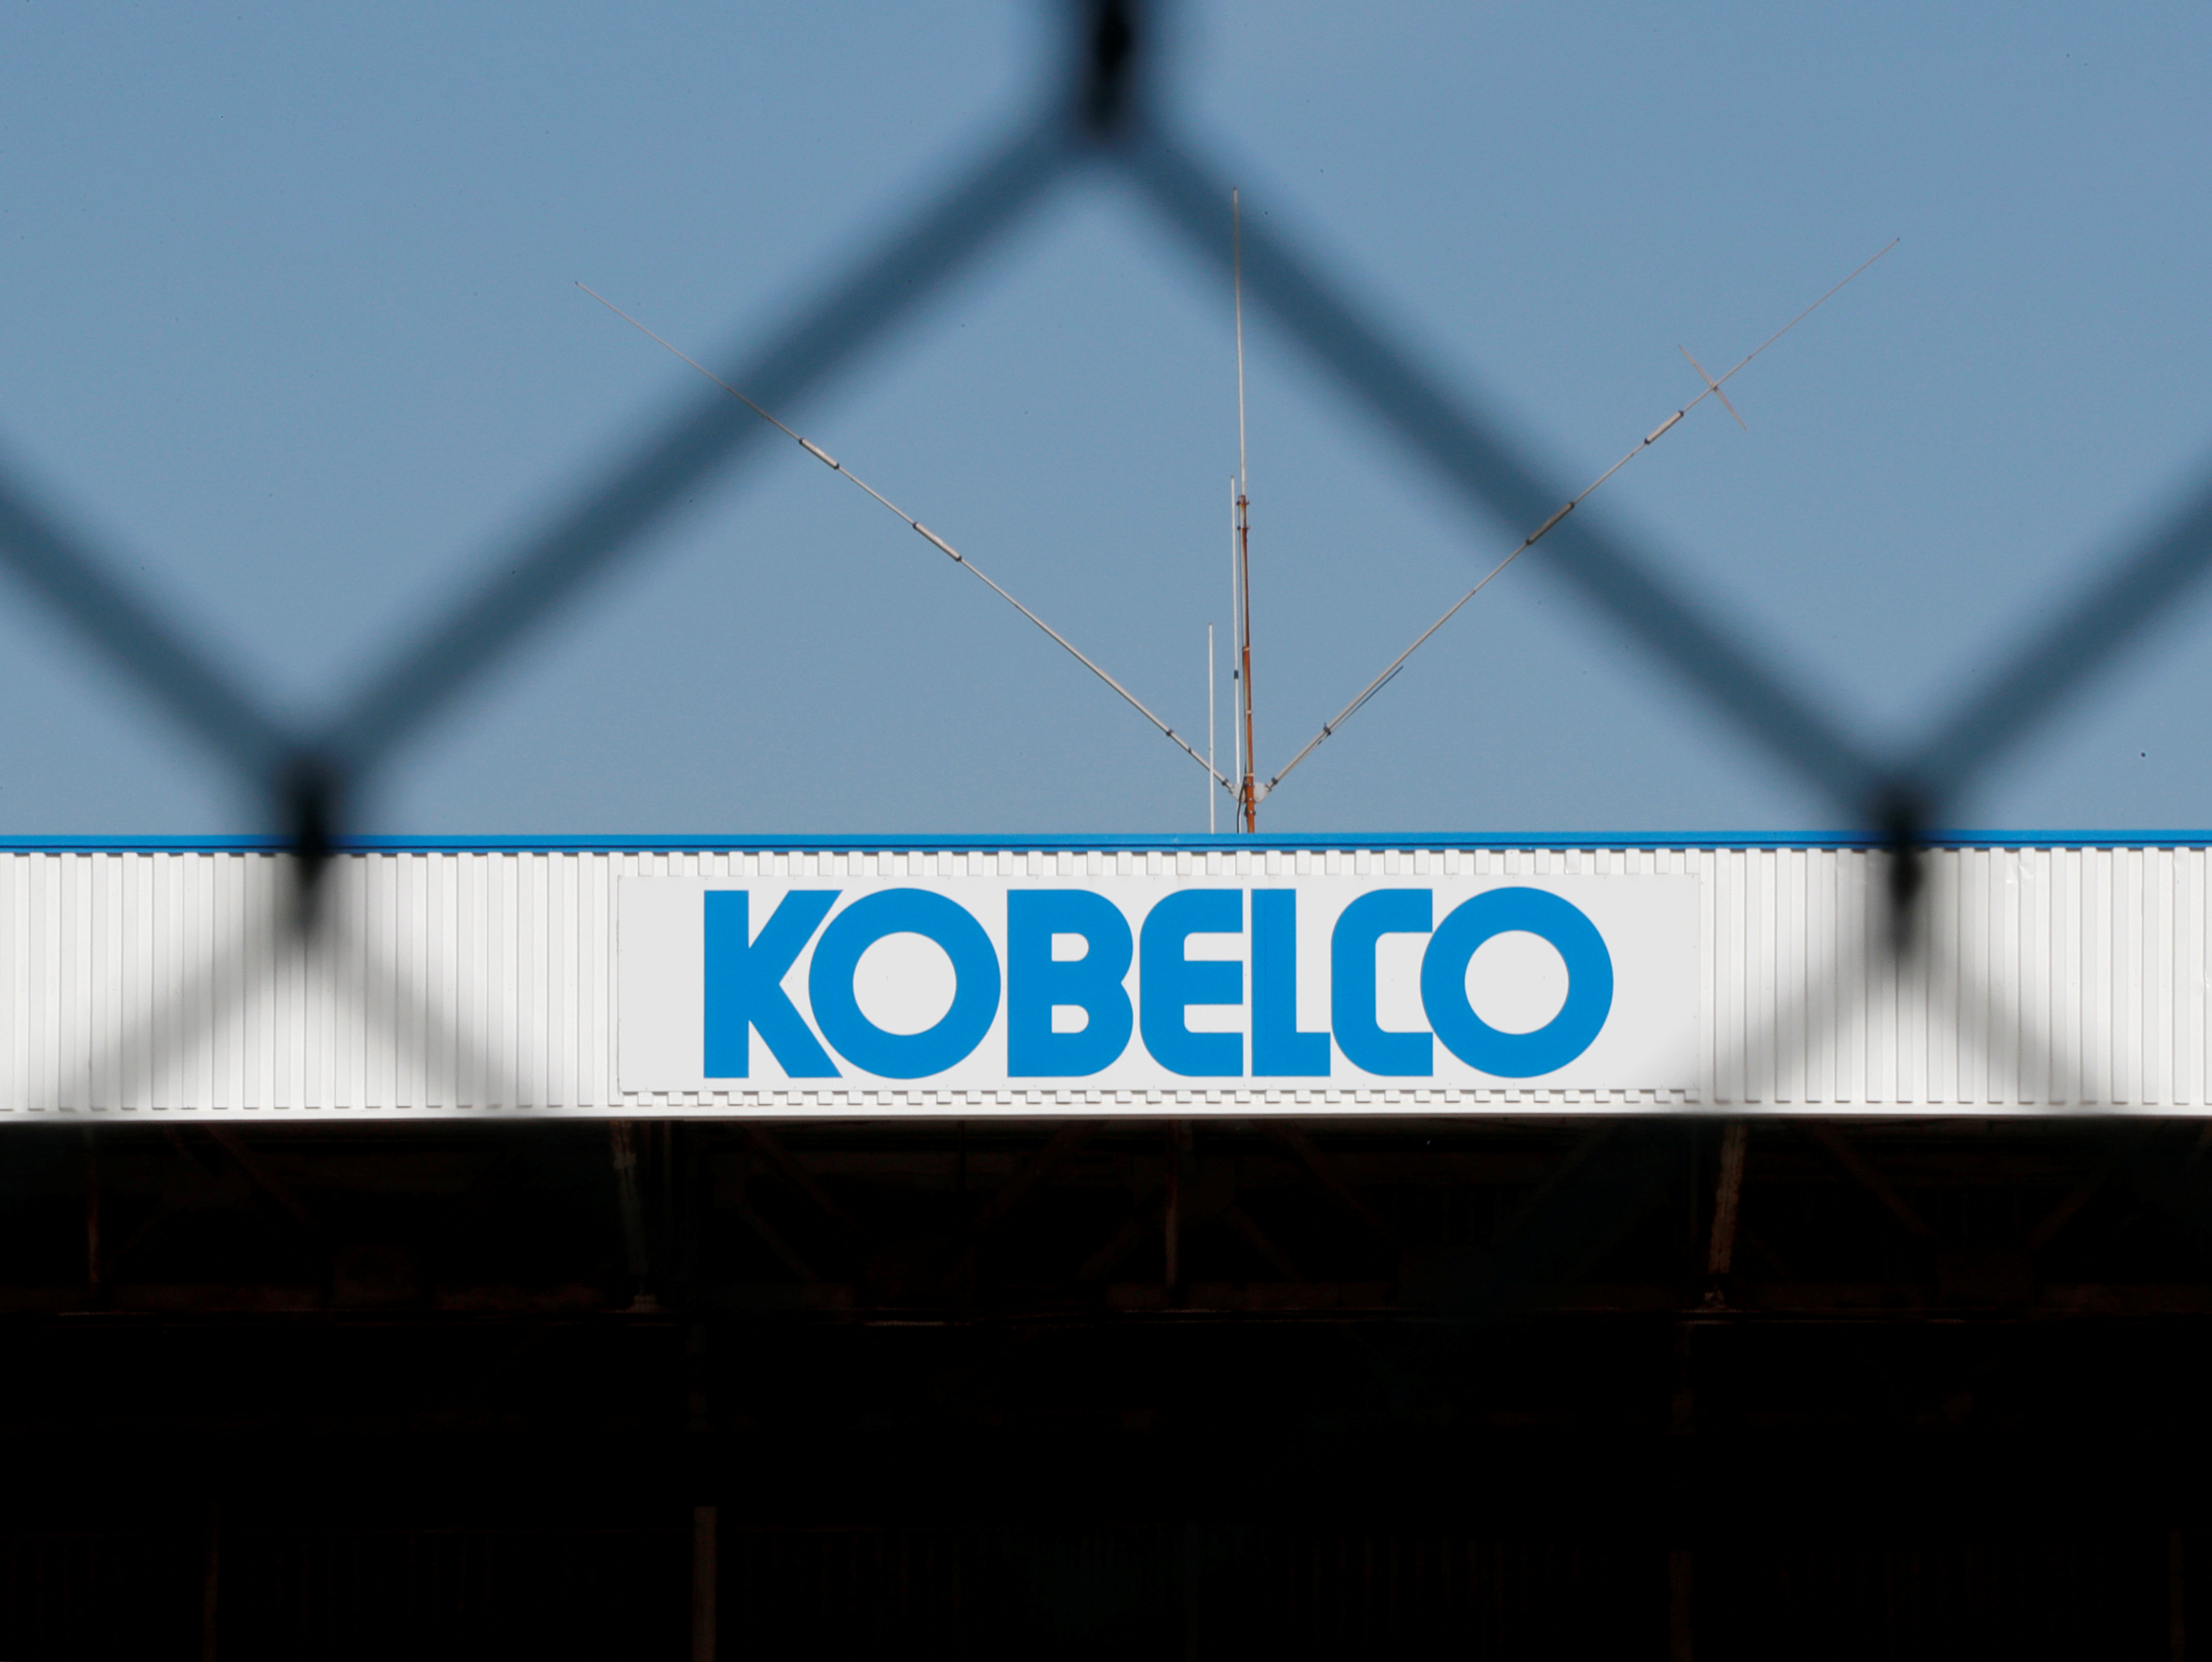 Kobe Steel's logo is seen through a fence at a facility of Kakogawa Works in Kakogawa